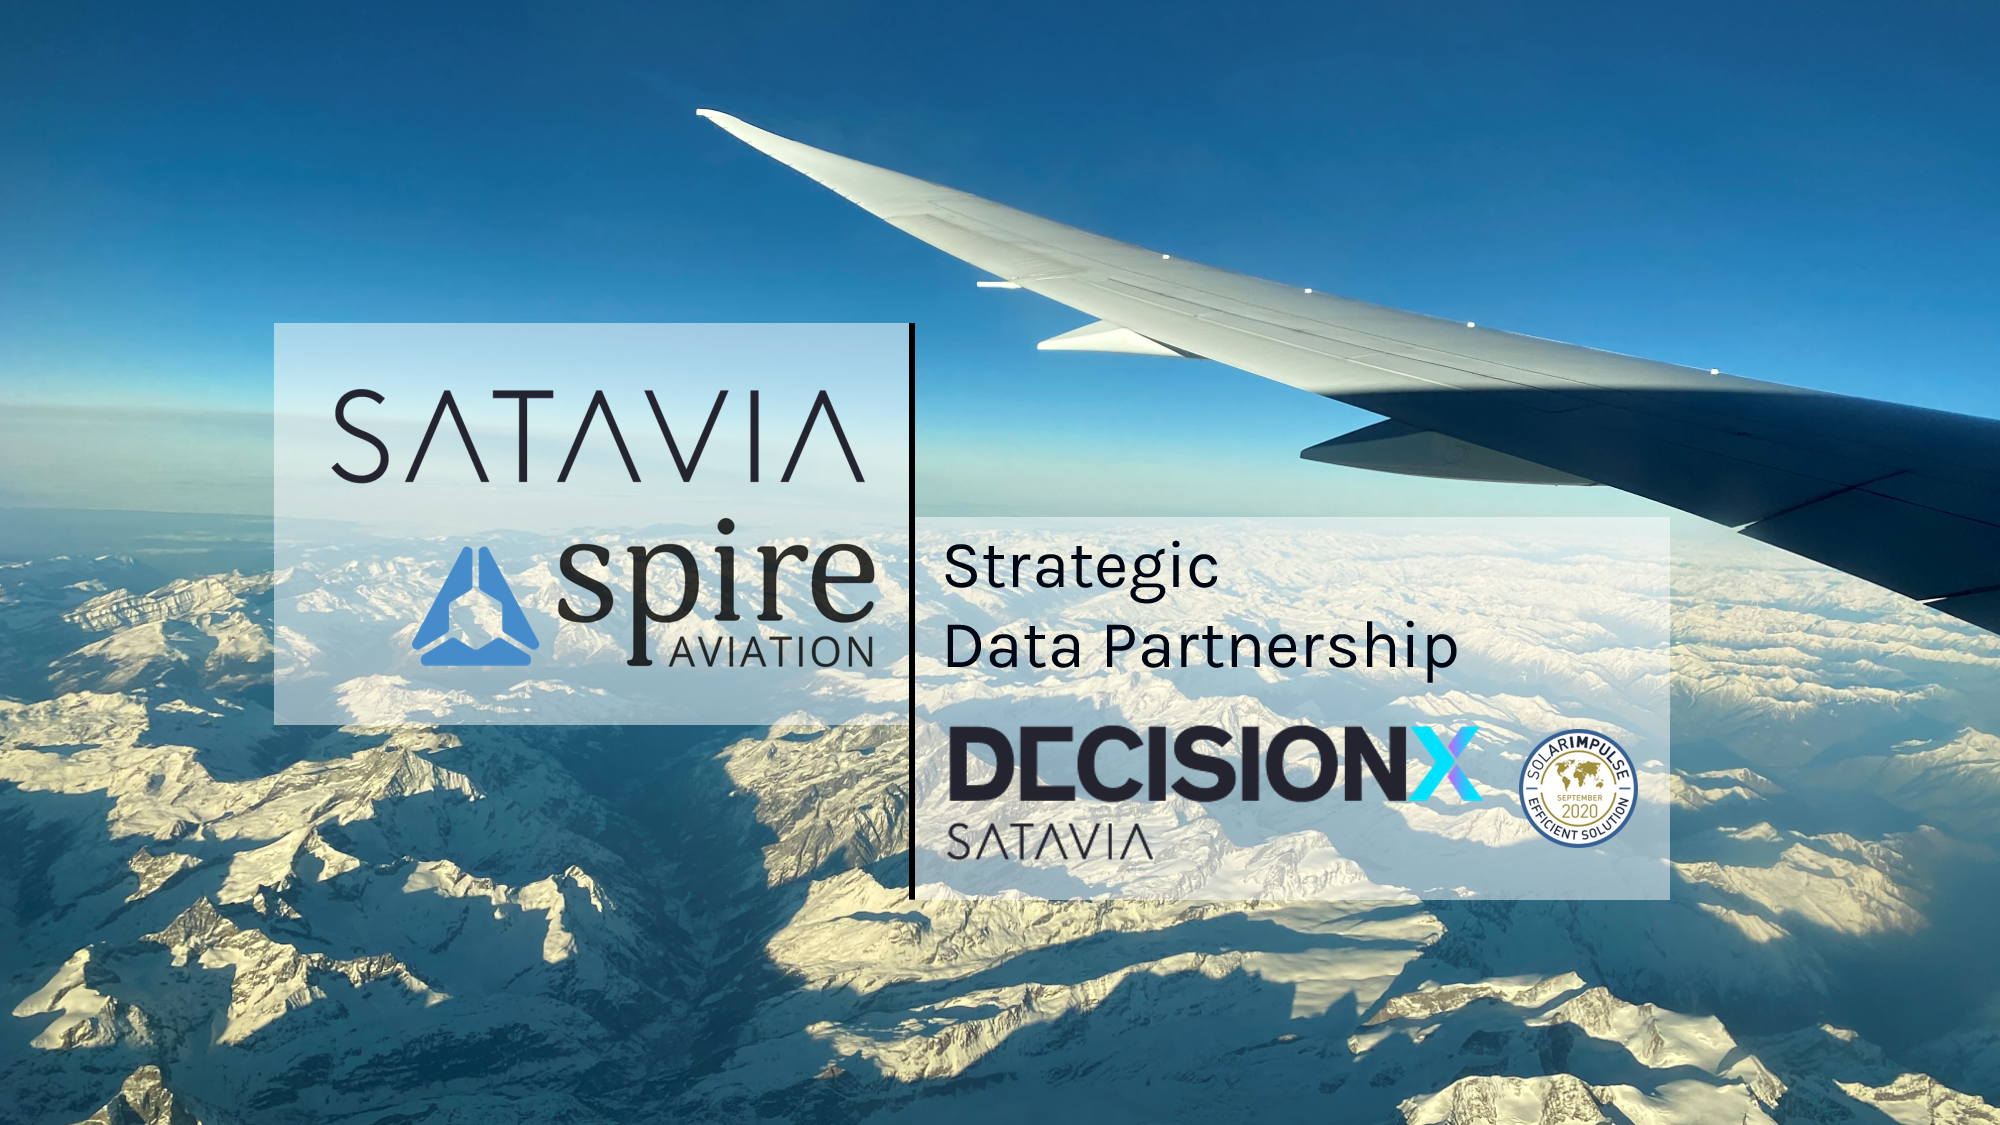 Spire Aviation and SATAVIA’s Strategic Data Partnership